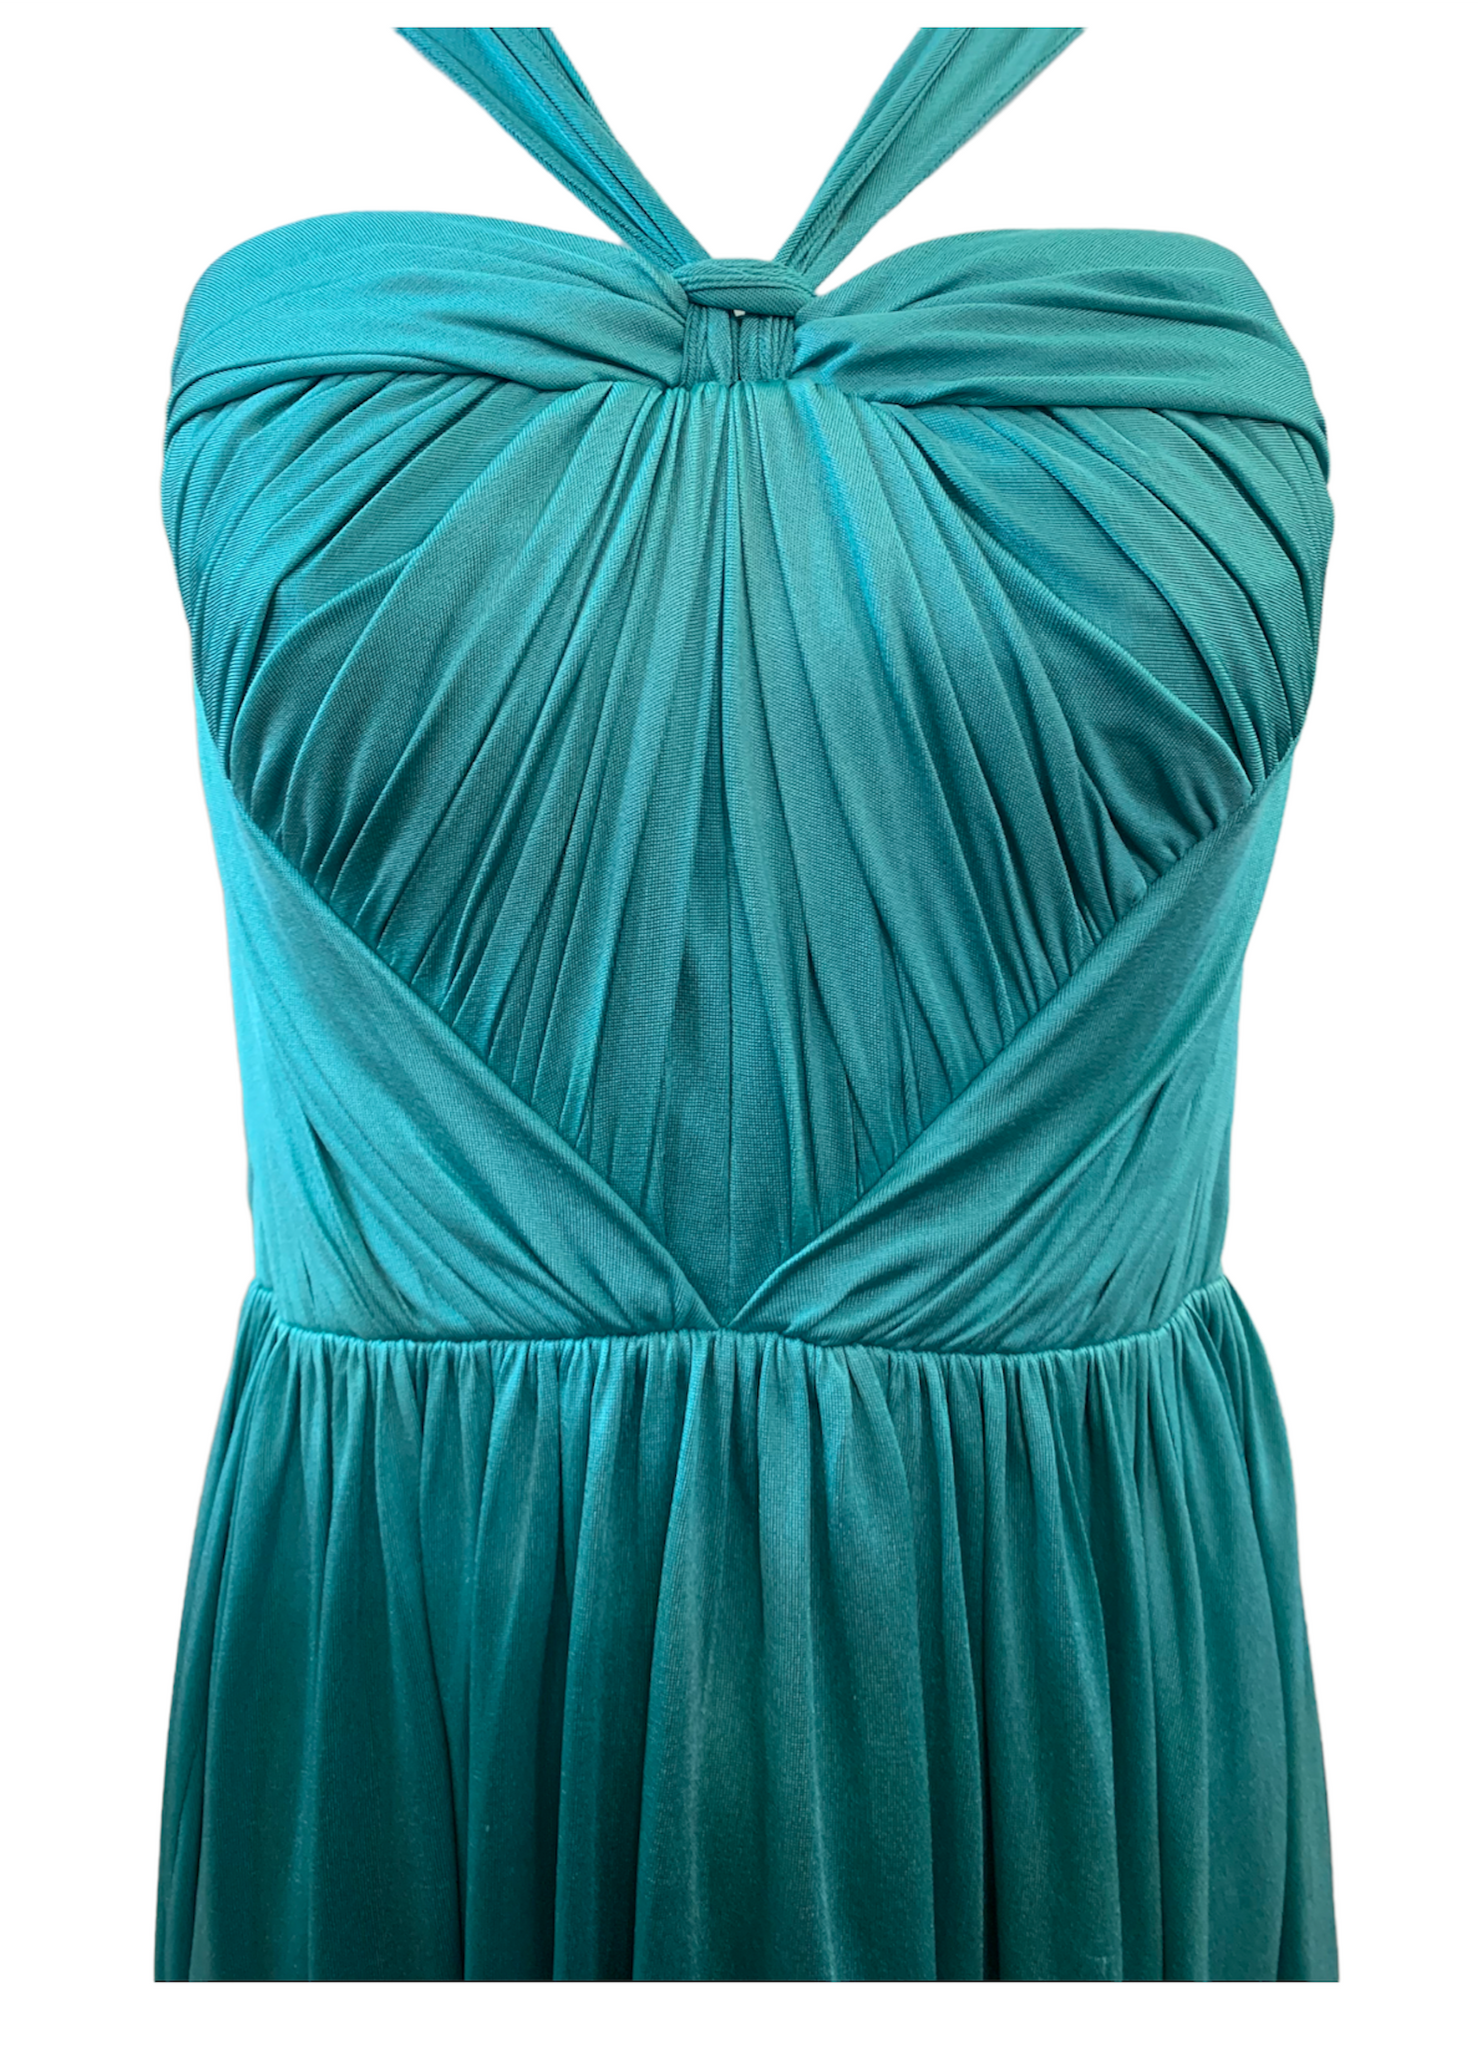 John Galliano for Dior Aqua Silk Jersey Cocktail Dress  DETAIL 4 of 6